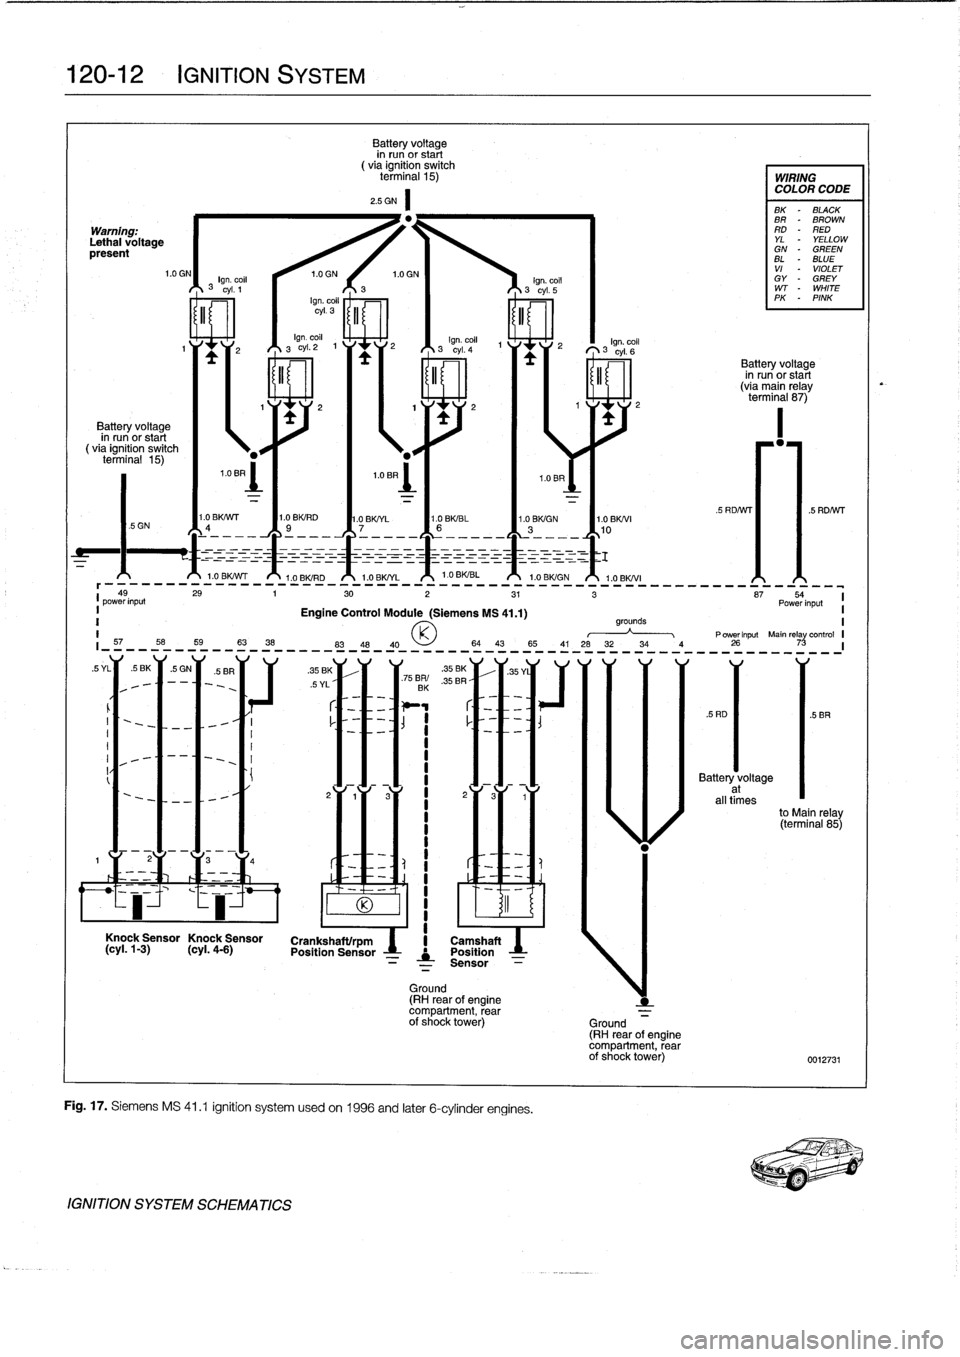 BMW 318i 1997 E36 Workshop Manual 
120-12

	

IGNITION
SYSTEM

Warning
.
Lethal
voltagepresent

Battery
voltage
in
run
or
start
(via
ignitíon
switch
terminal
15)

I
t

IGNITION
SYSTEM
SCHEMATICS

Battery
voltage
in
run
or
start
(
via